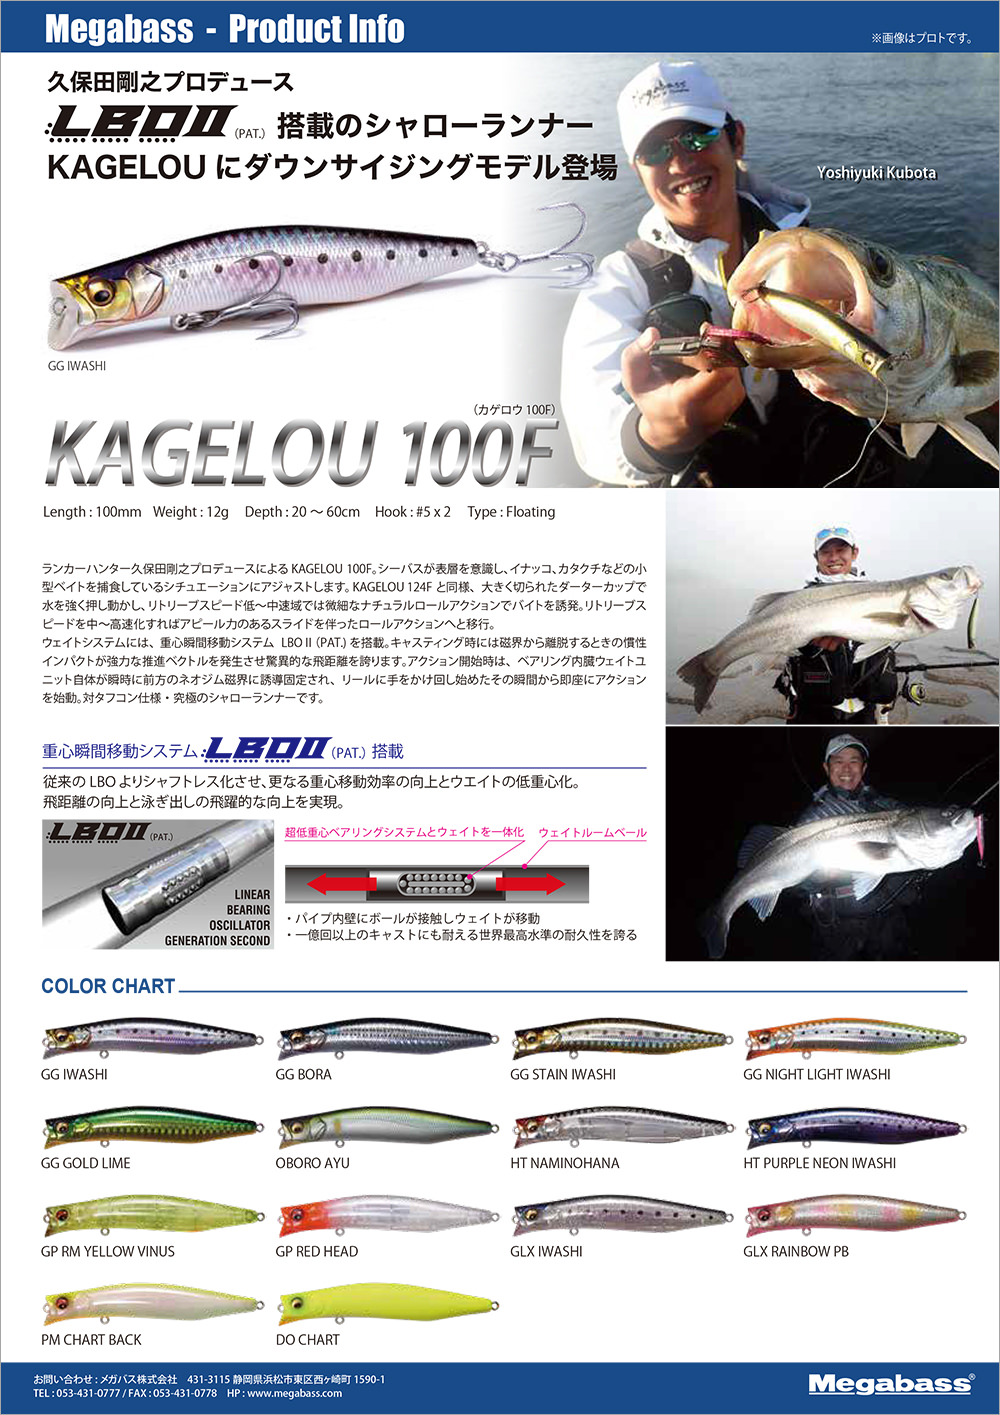 KAGELOU(カゲロウ) 100F ドチャート ルアー | Megabass - メガバス 